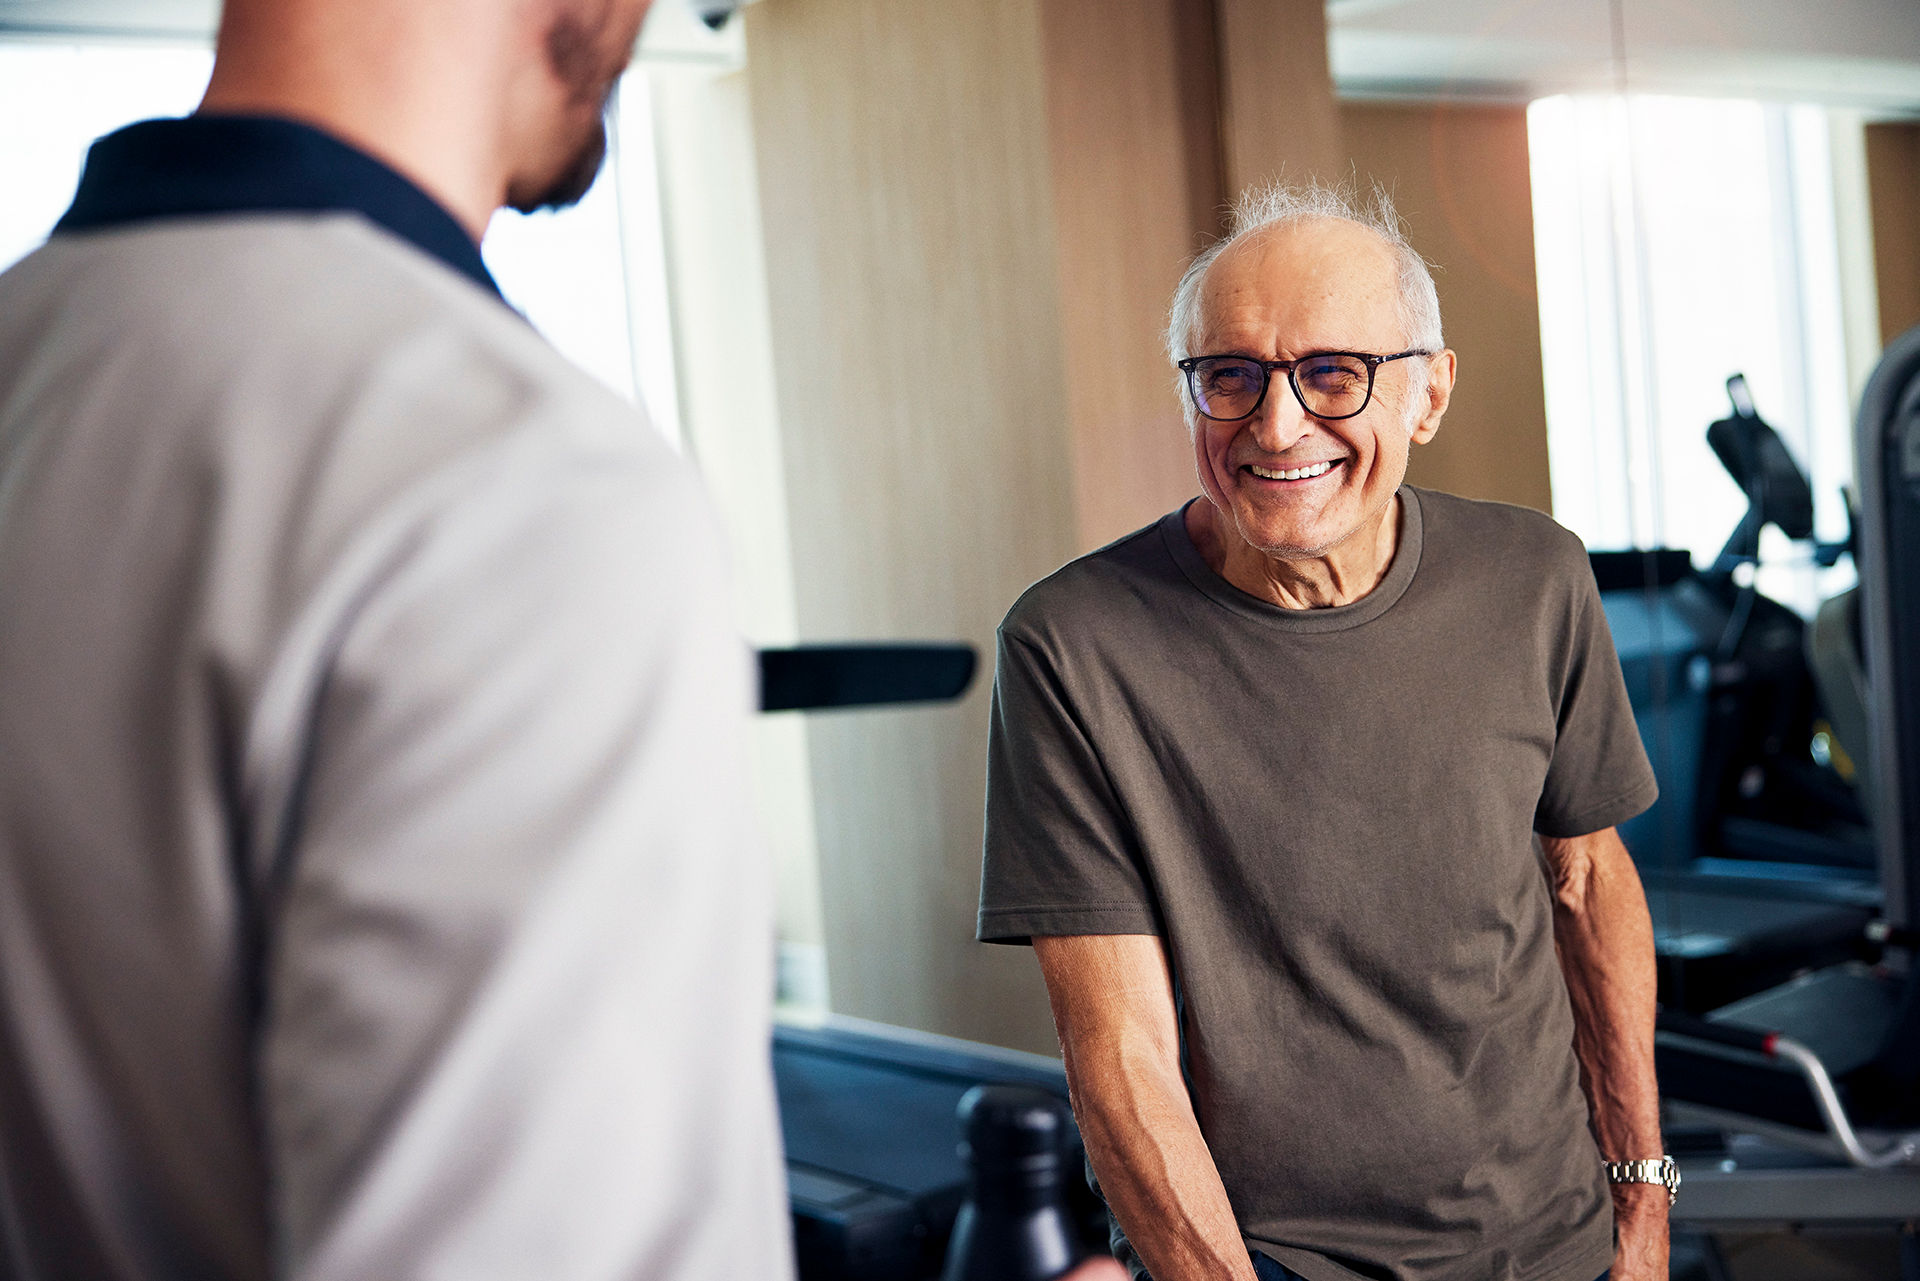 Senior man smiling at caregiver